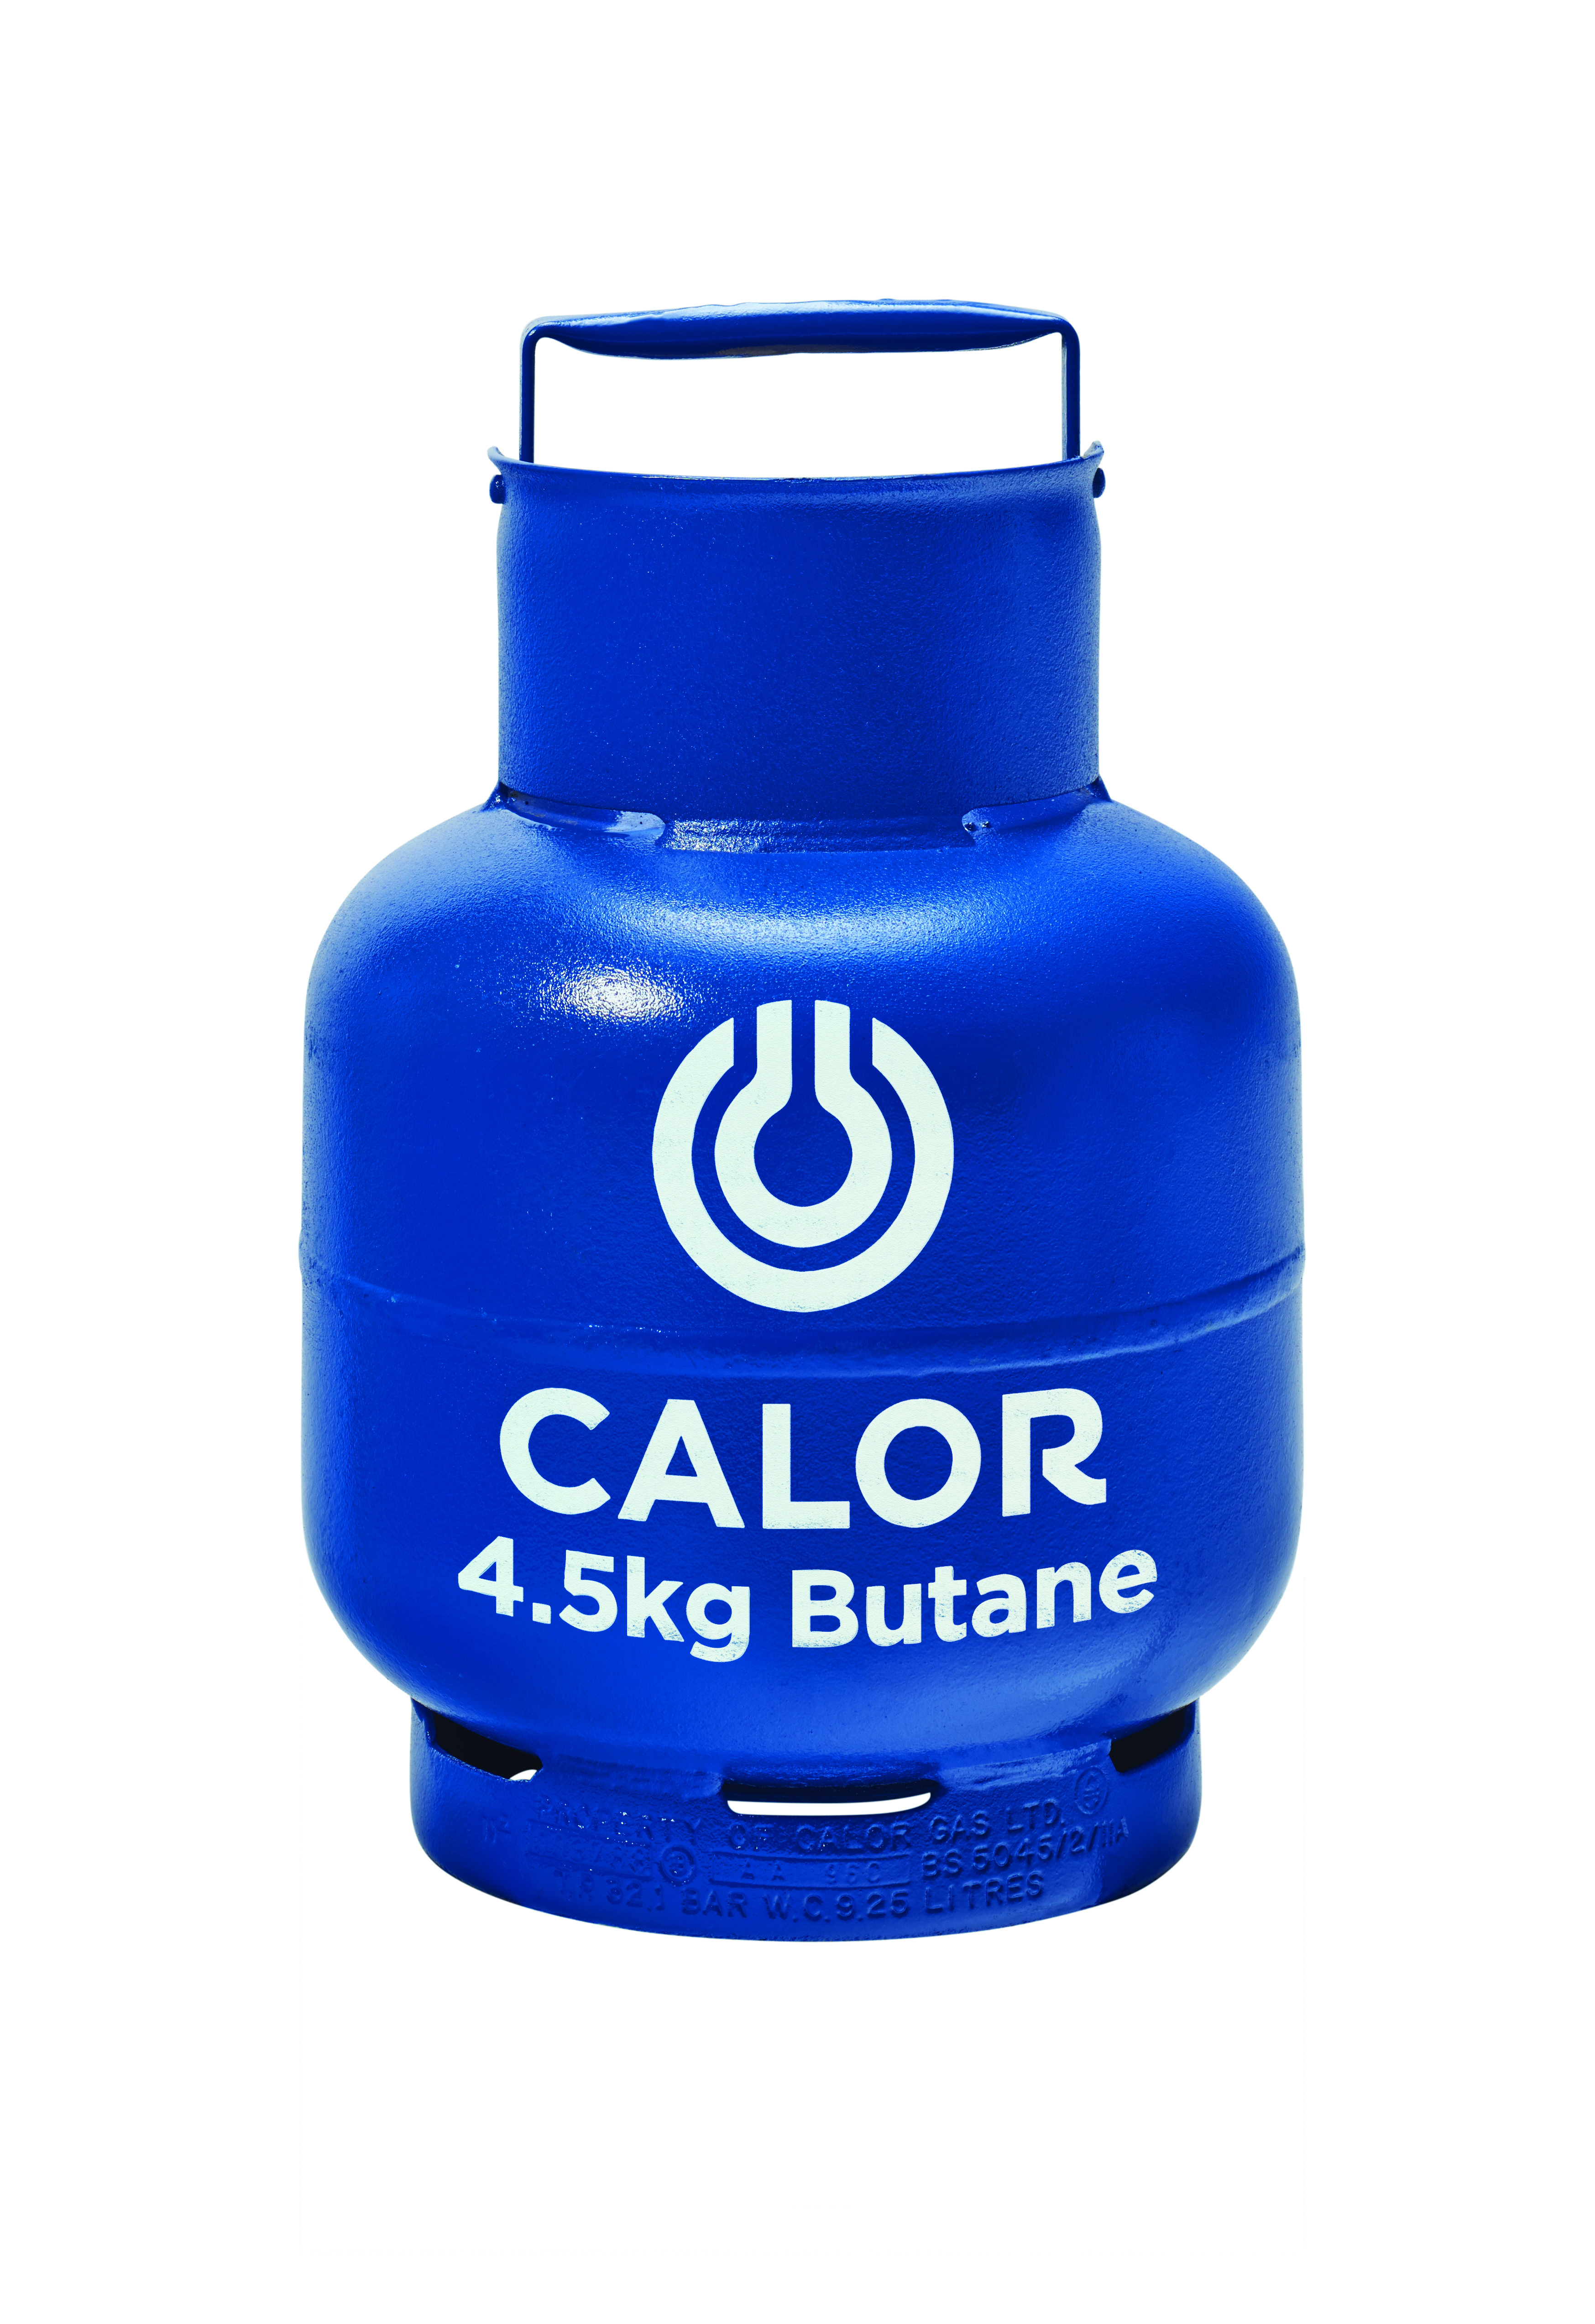 4.5kg Butane Calor Gas Bottles Ashington